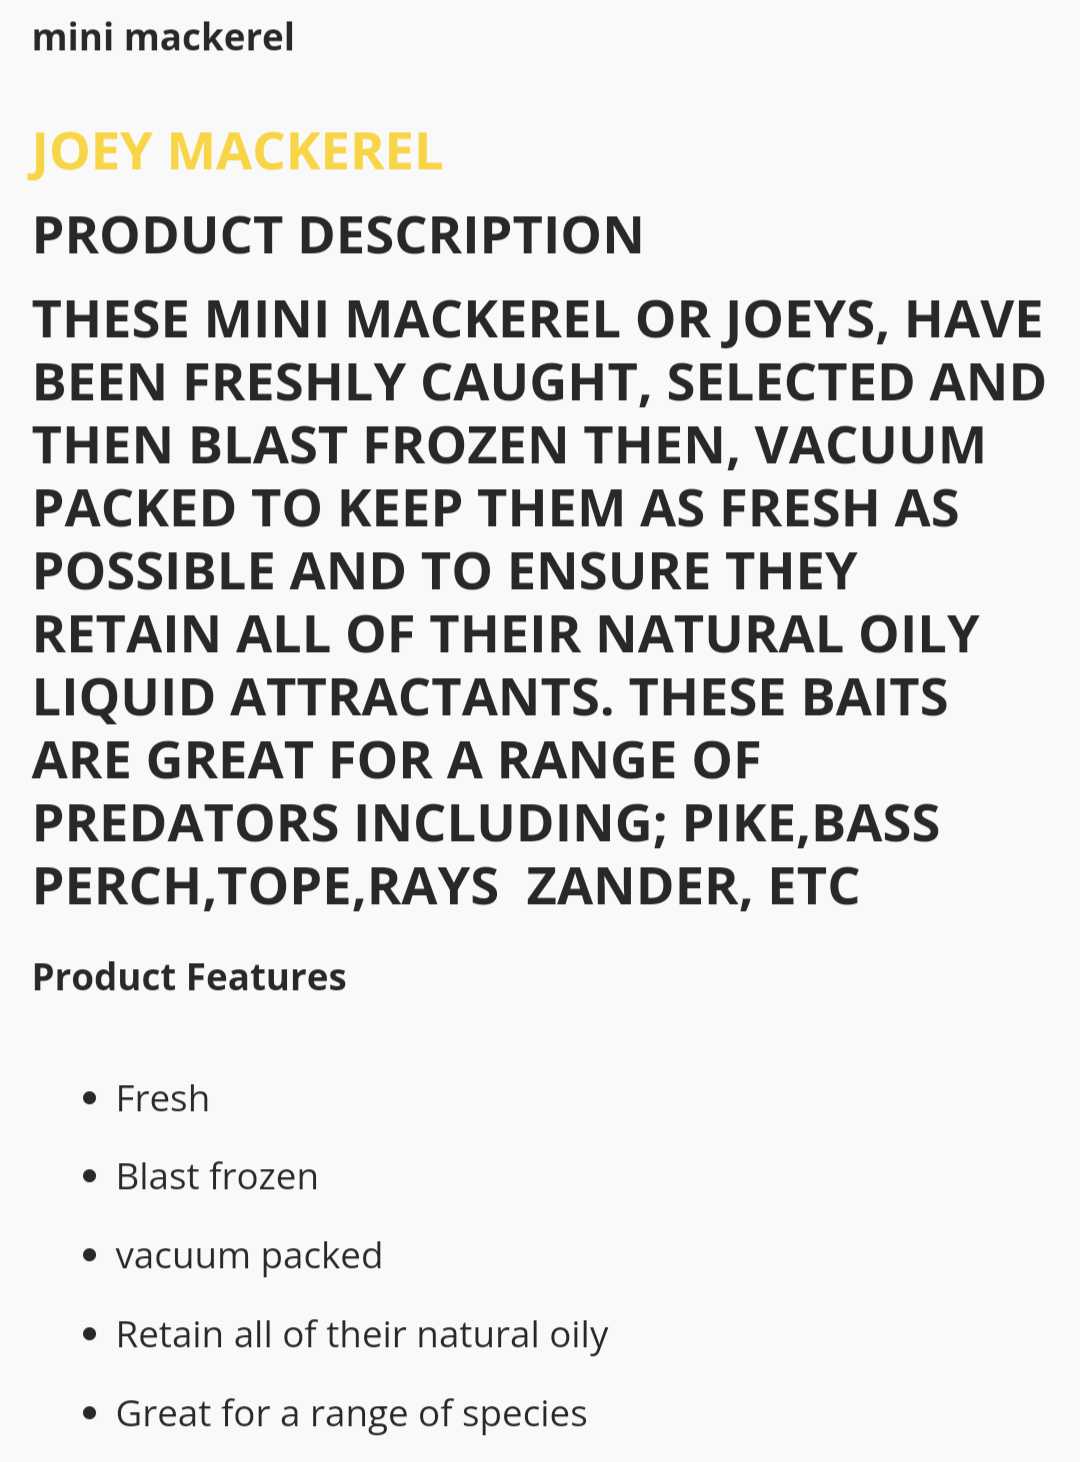 Mackerel Joey's Frozen Bait - www.nafni.com